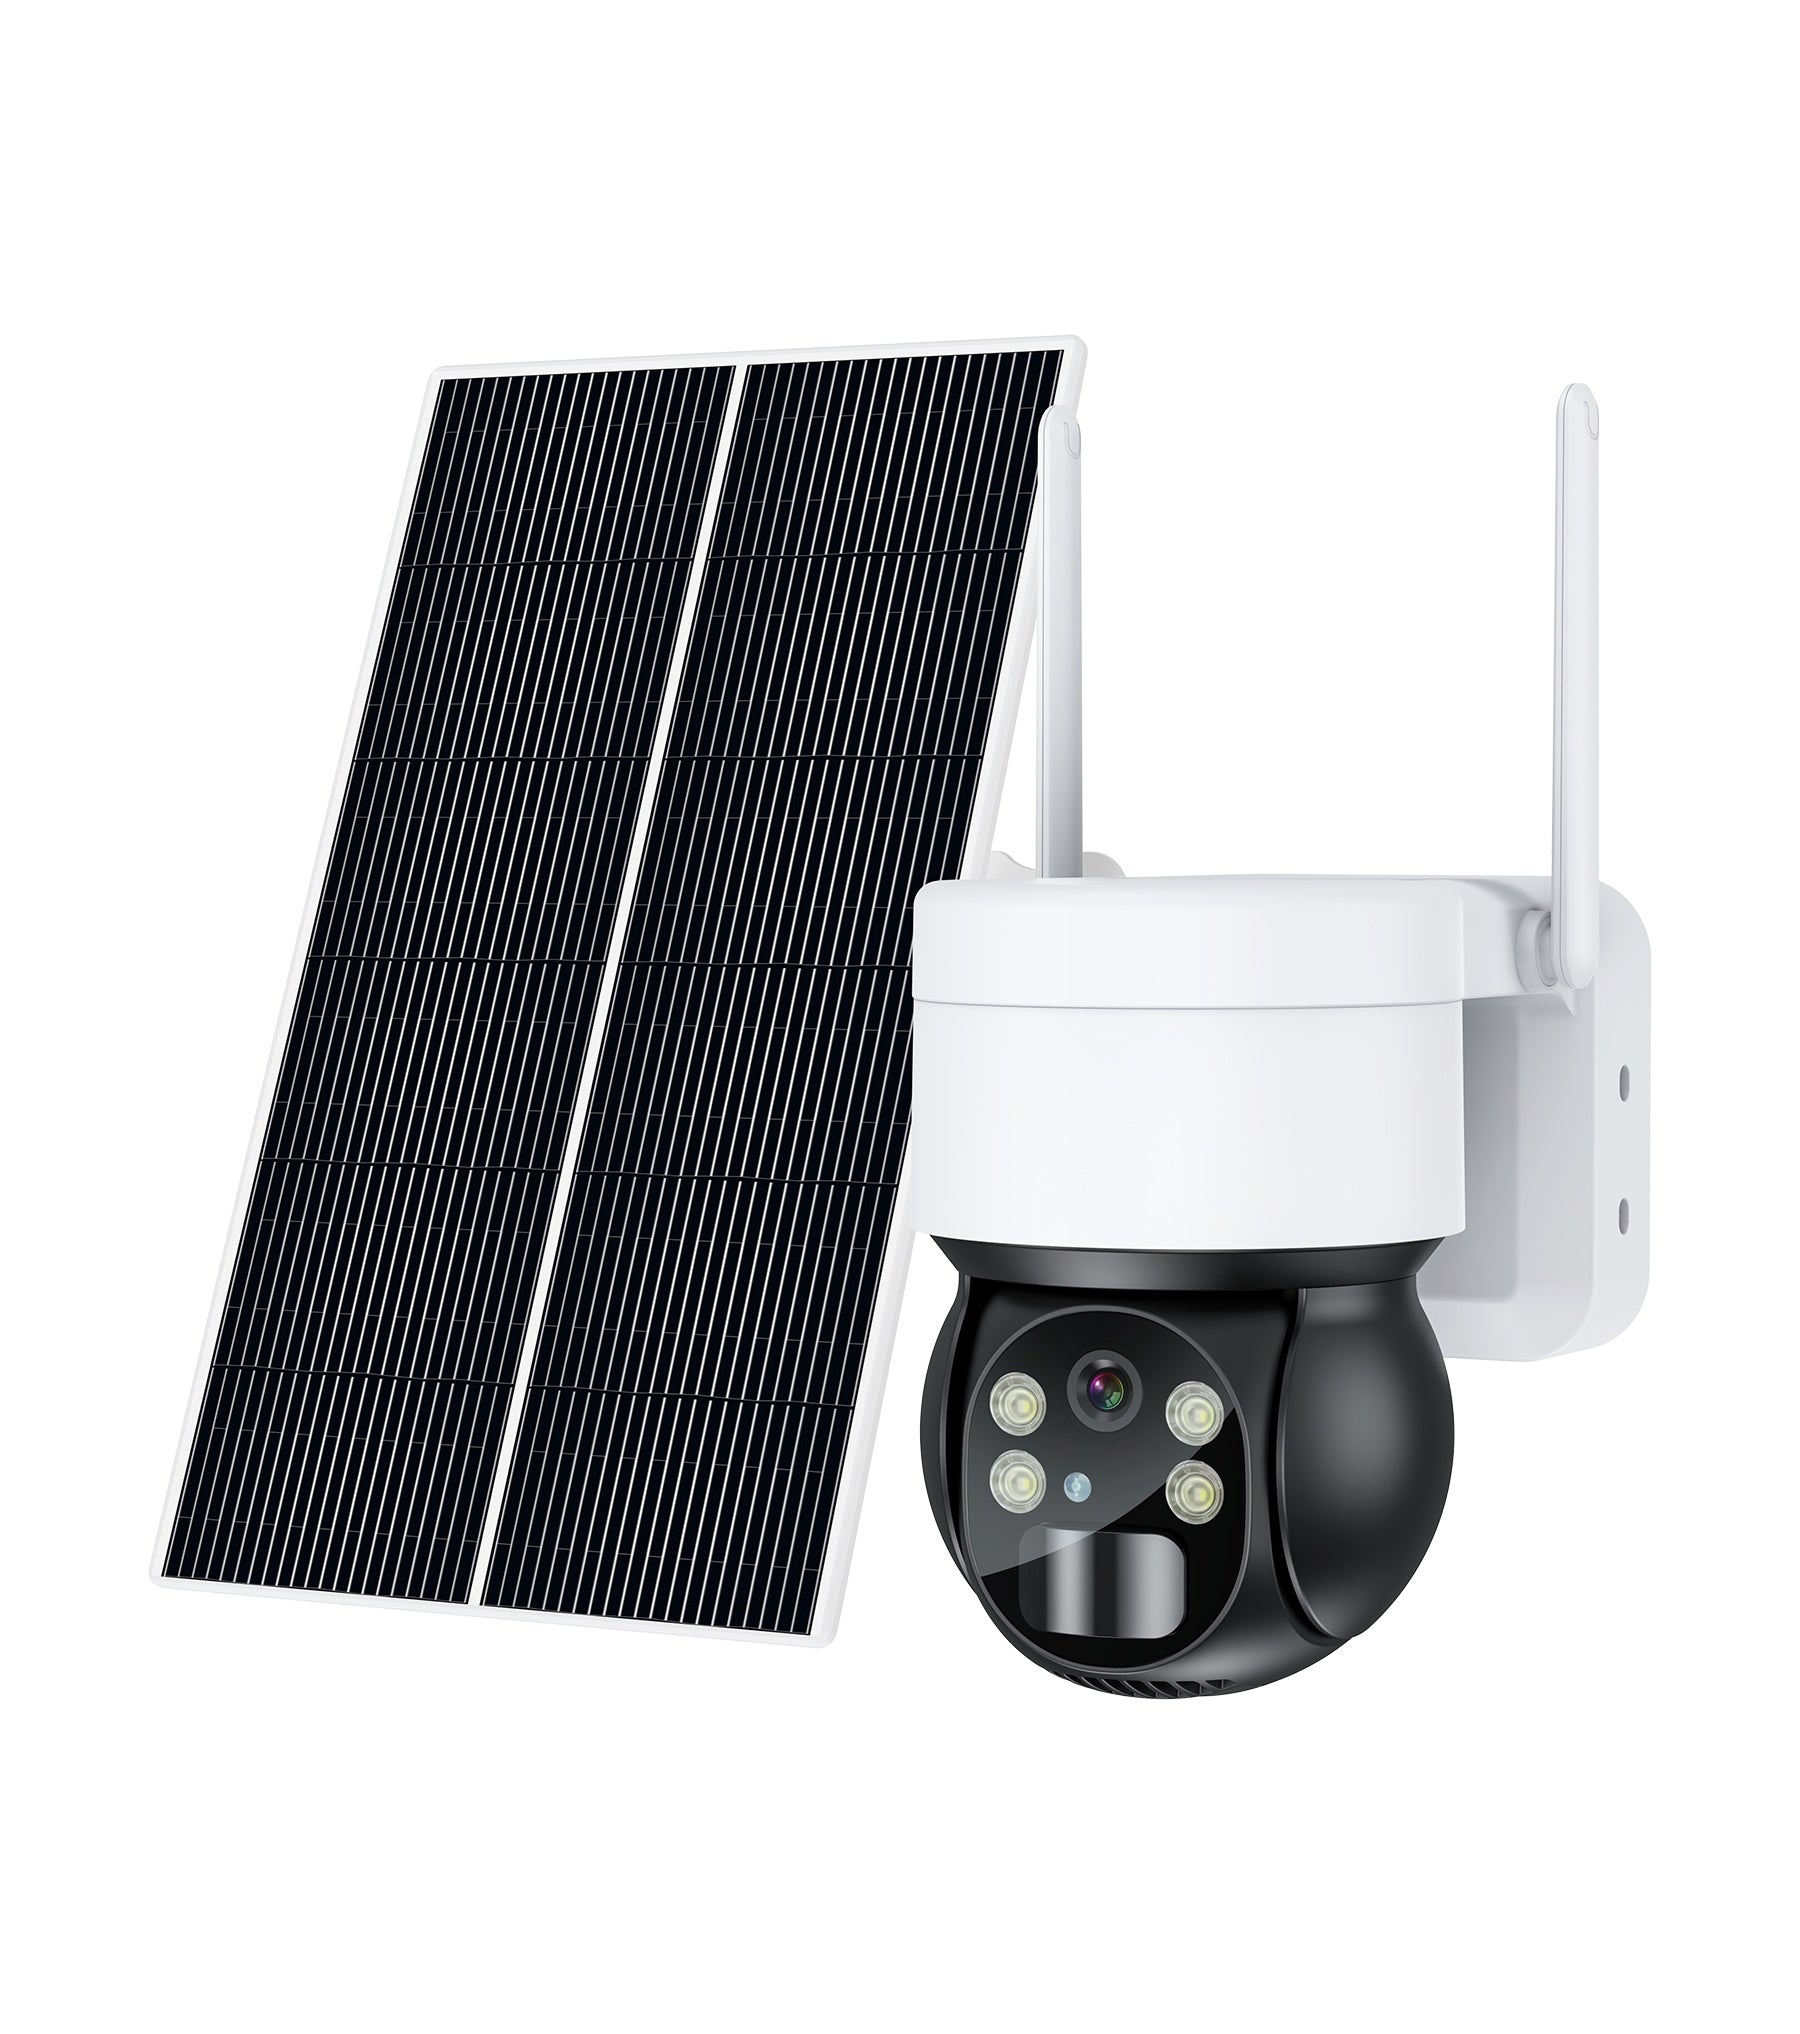 Ankway 2K Security Camera Outdoor WiFi Battery, Wireless Surveillance Camera Solar with Colour Night Vision, PIR Sensor, Siren/White Light Alarm, 355°/90° Pan Tilt, 2-Way Audio, Cloud/SD Card